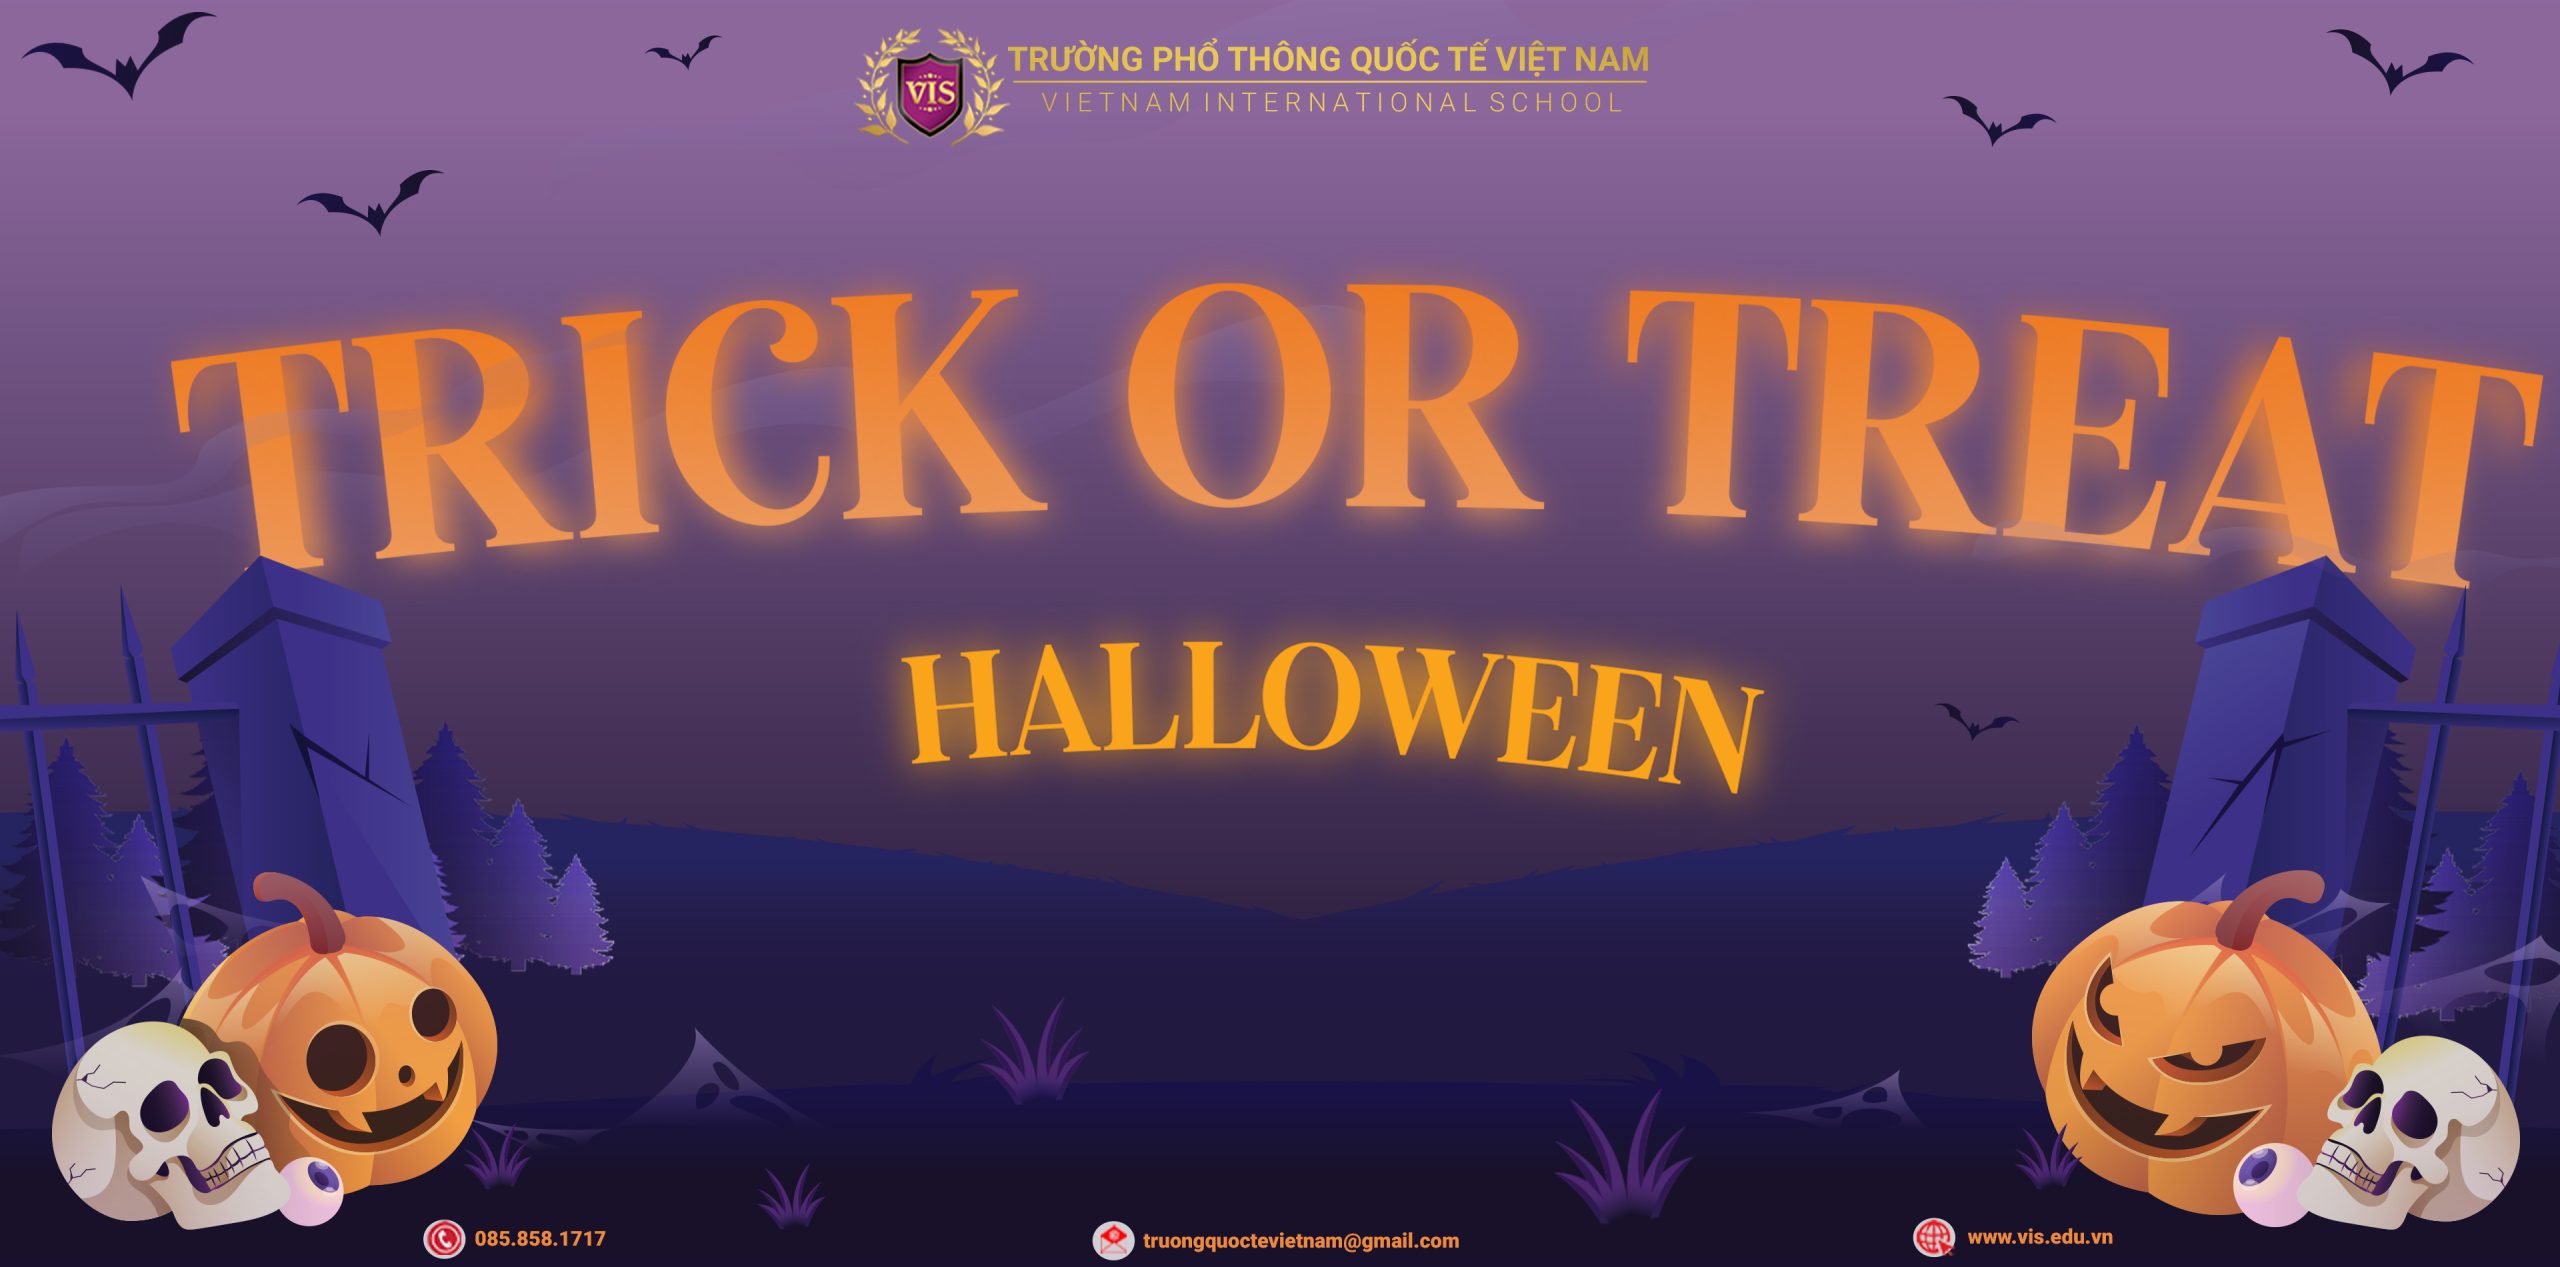 Halloween: Tríck or Treat